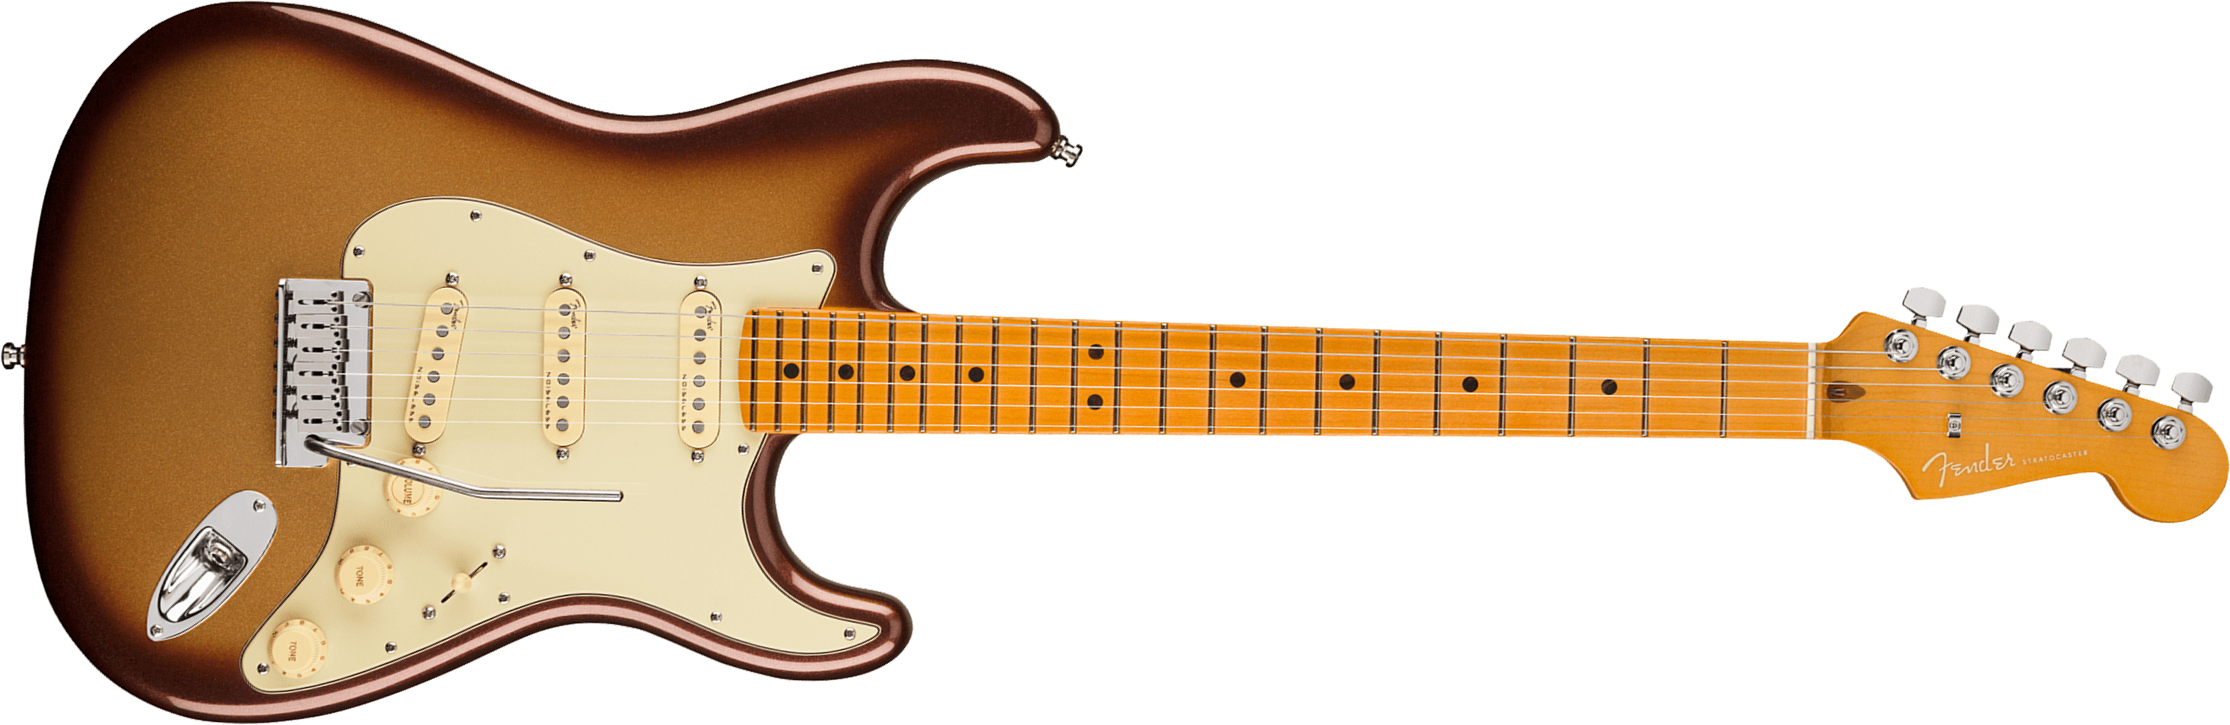 Fender Strat American Ultra 2019 Usa Mn - Mocha Burst - Guitare Électrique Forme Str - Main picture